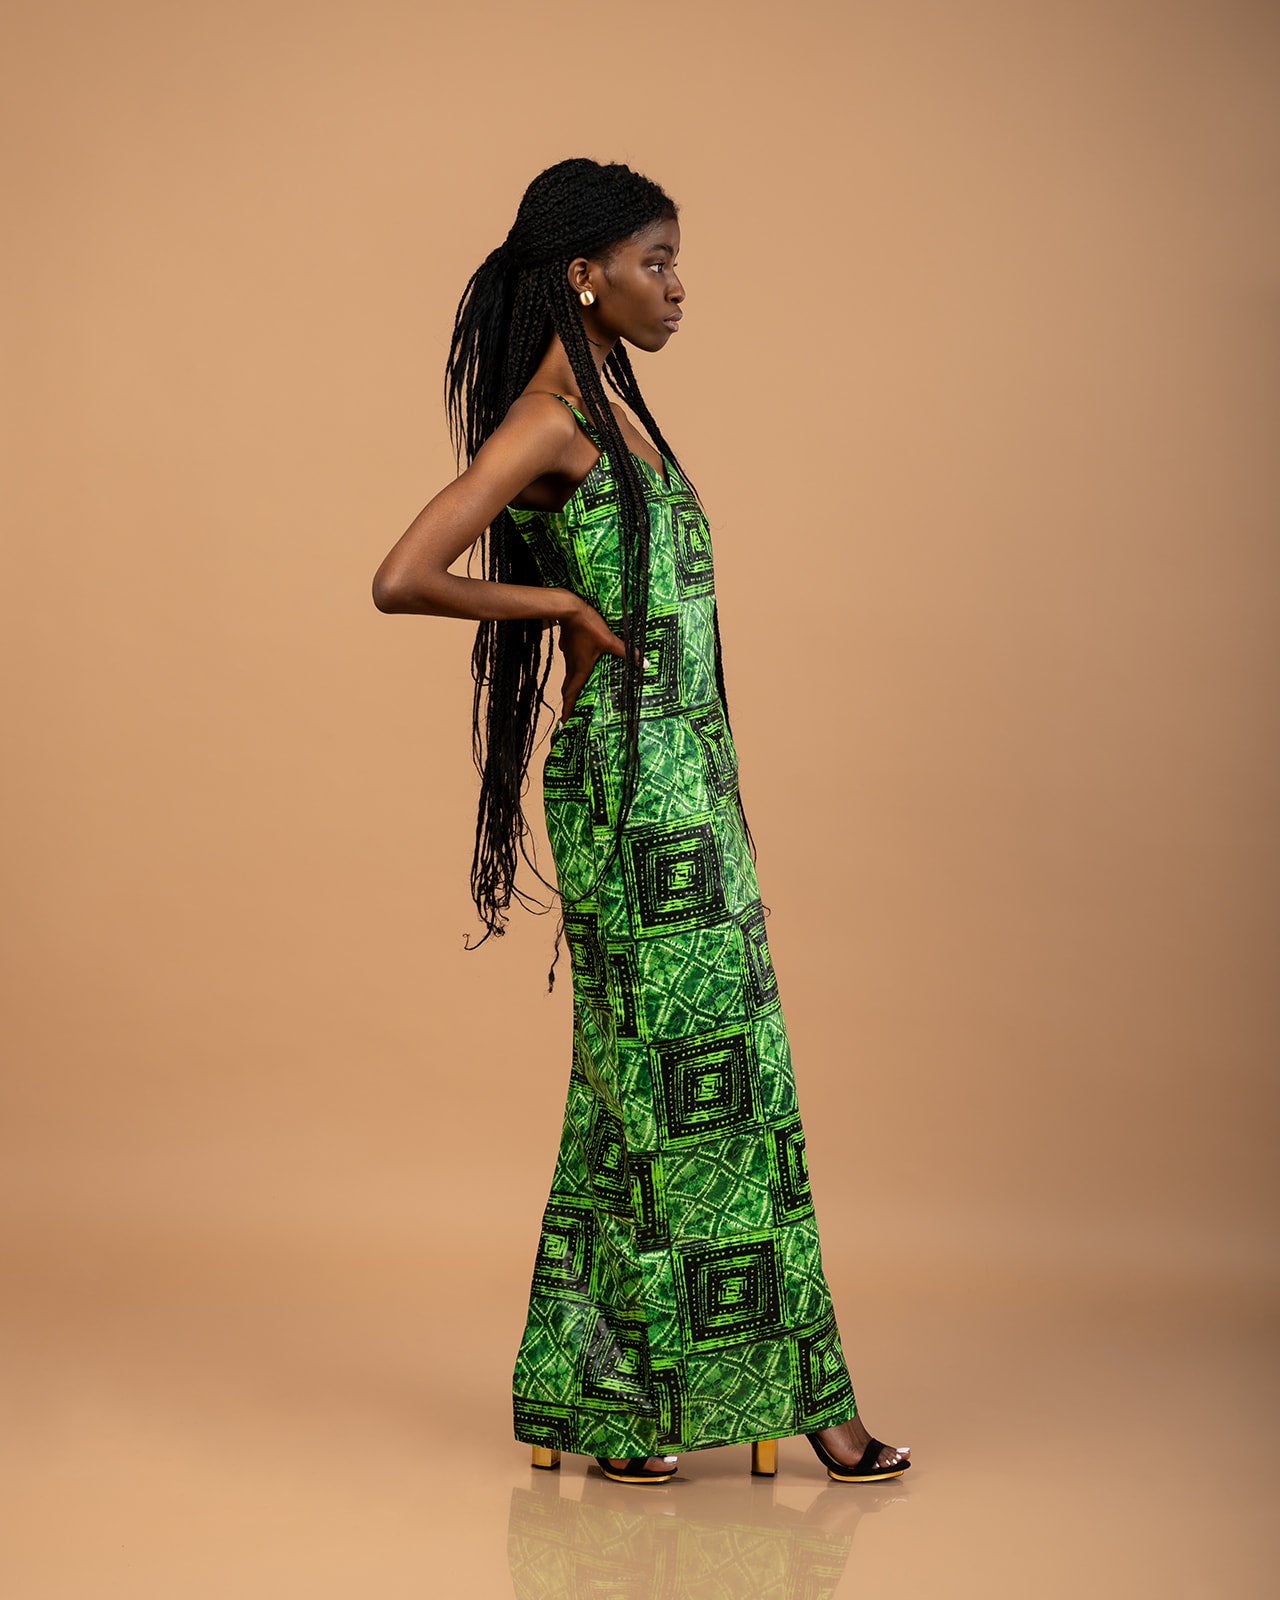 Handmade African Print two-piece Ankara mesh dress: Made with 100% cotton high-quality African Batik wax fabric